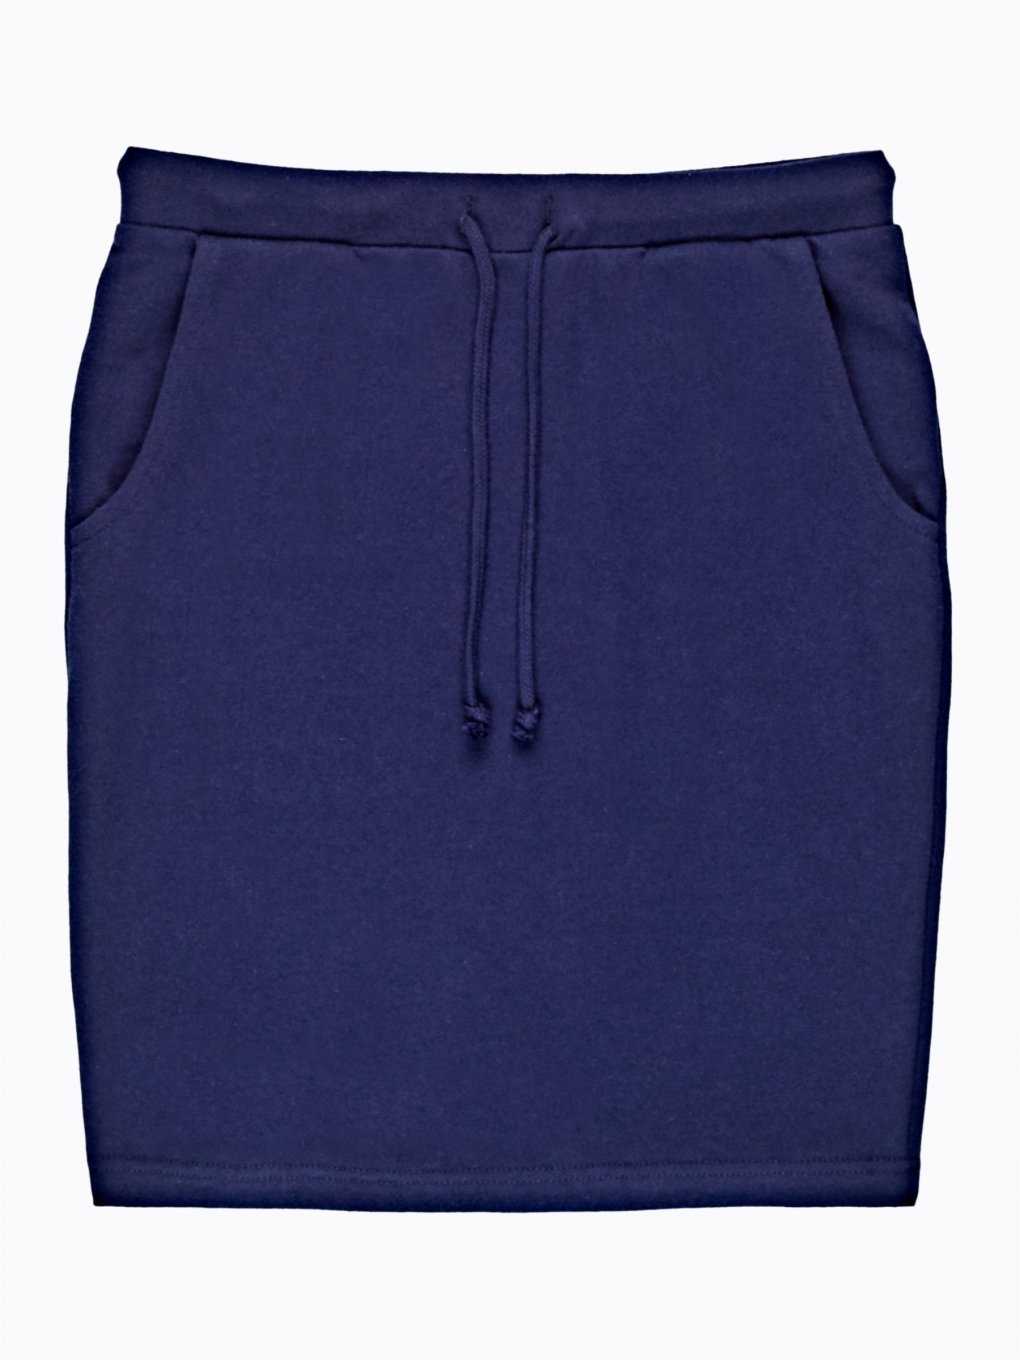 KIDS FASHION Skirts Jean Navy Blue 110                  EU Mayoral casual skirt discount 68% 